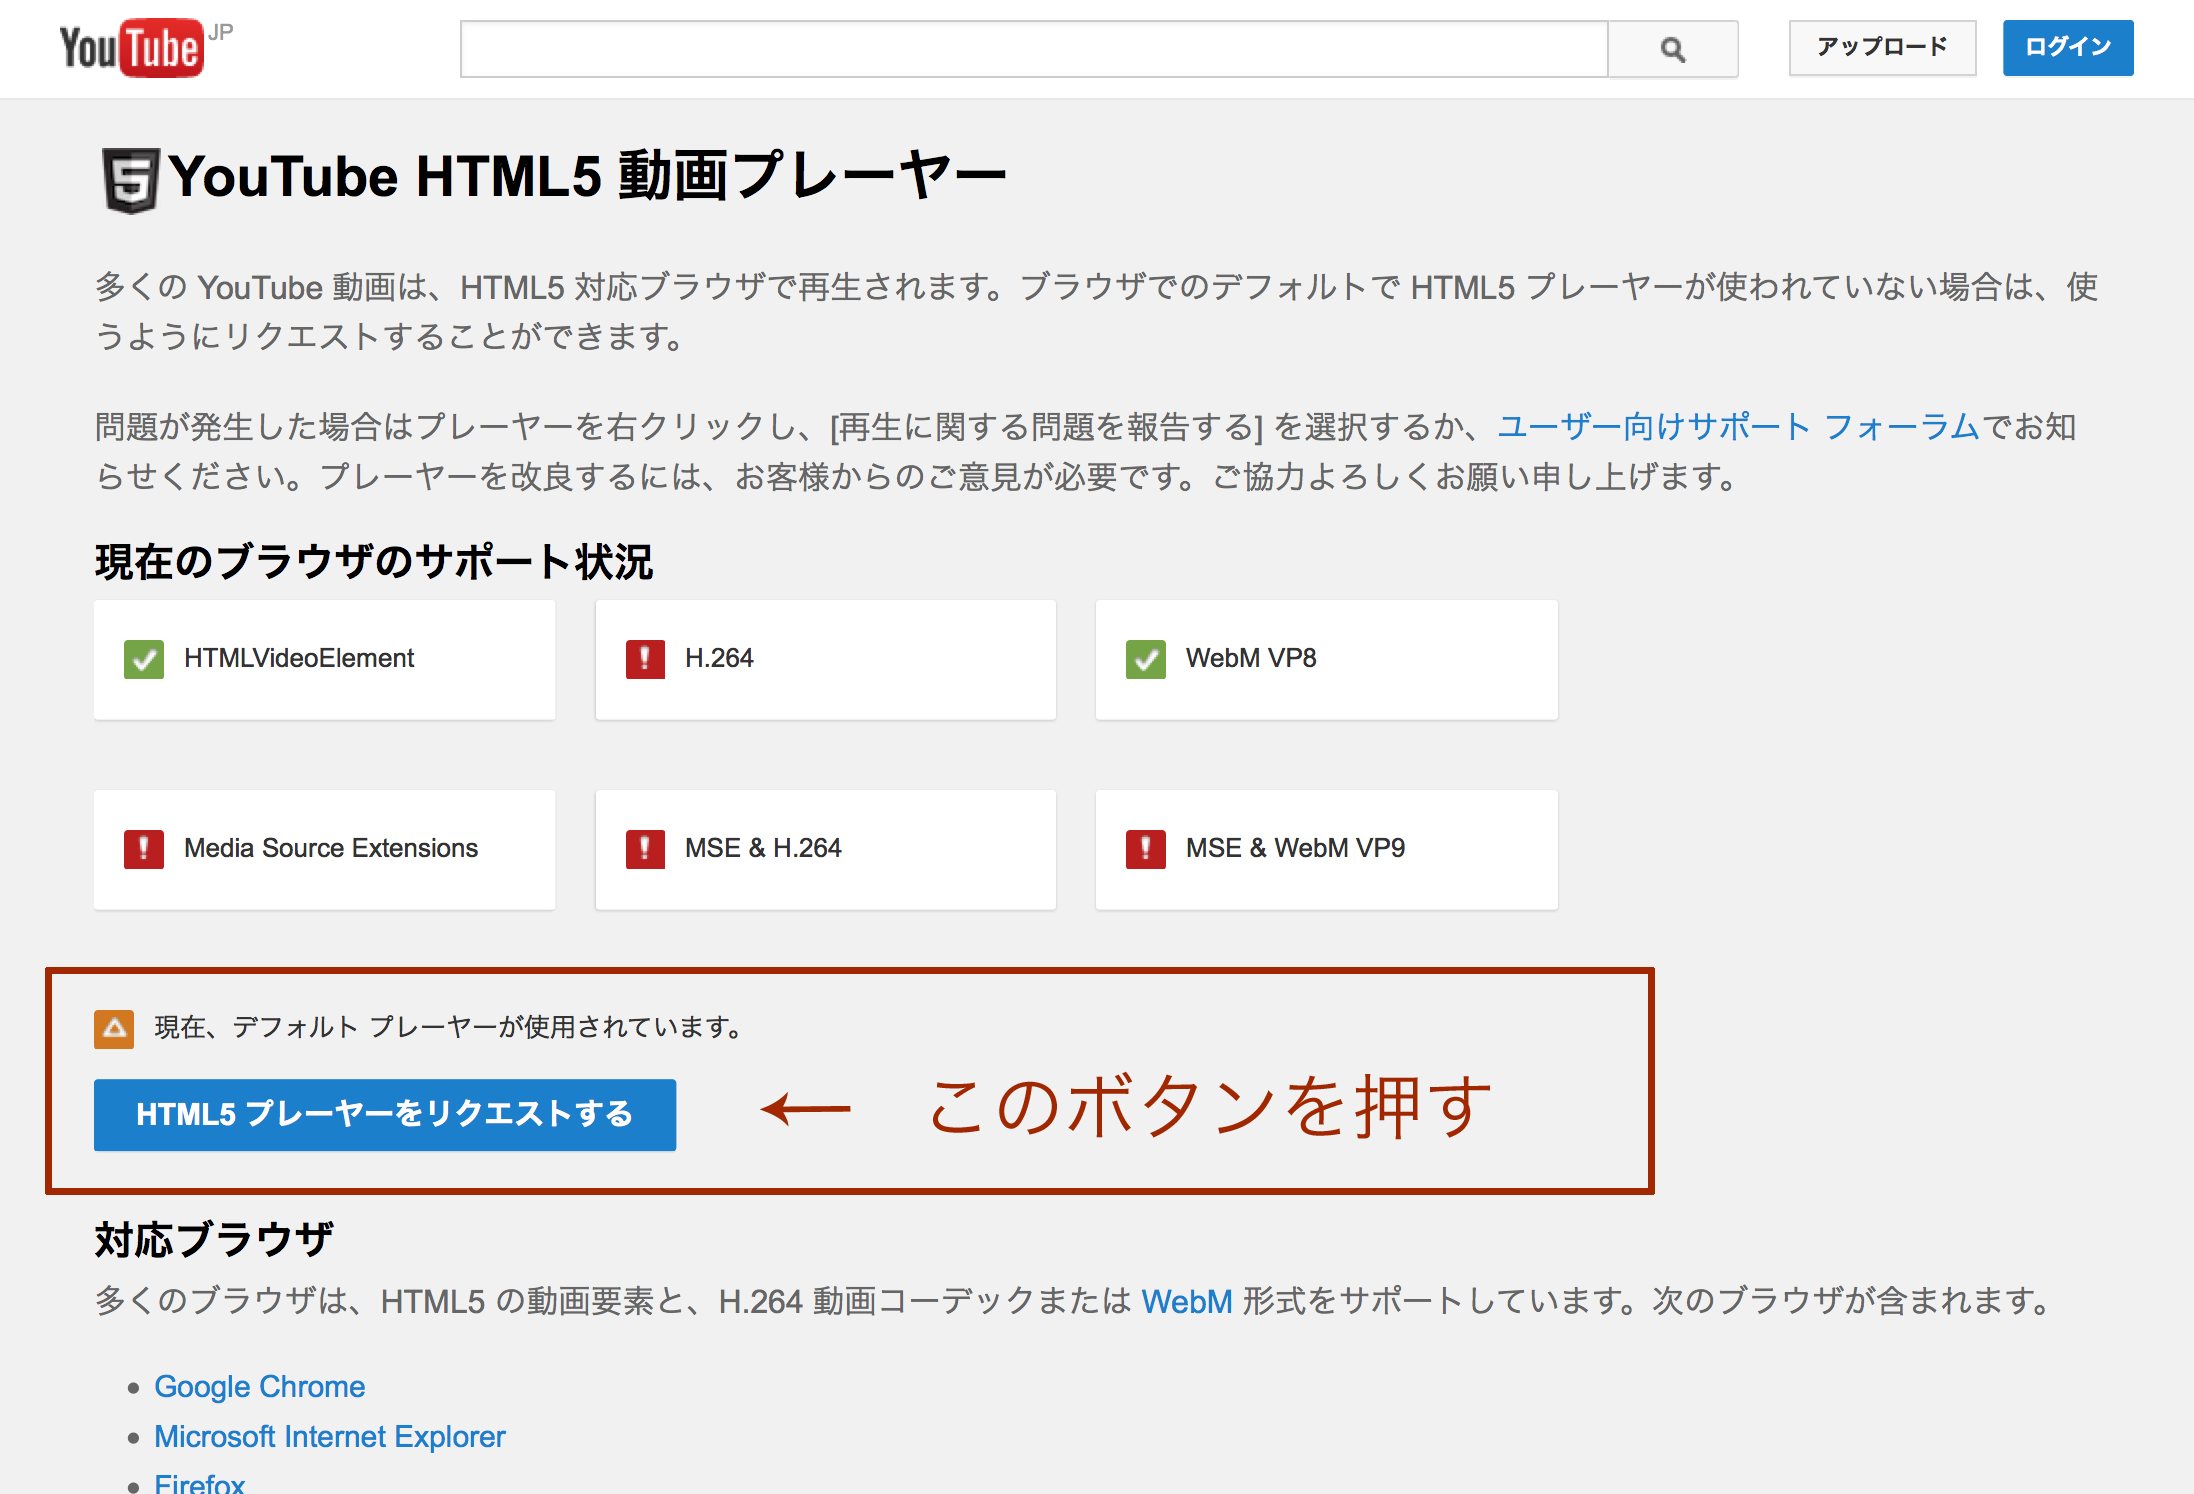 「YouTube HTML5 動画プレーヤー」ページ